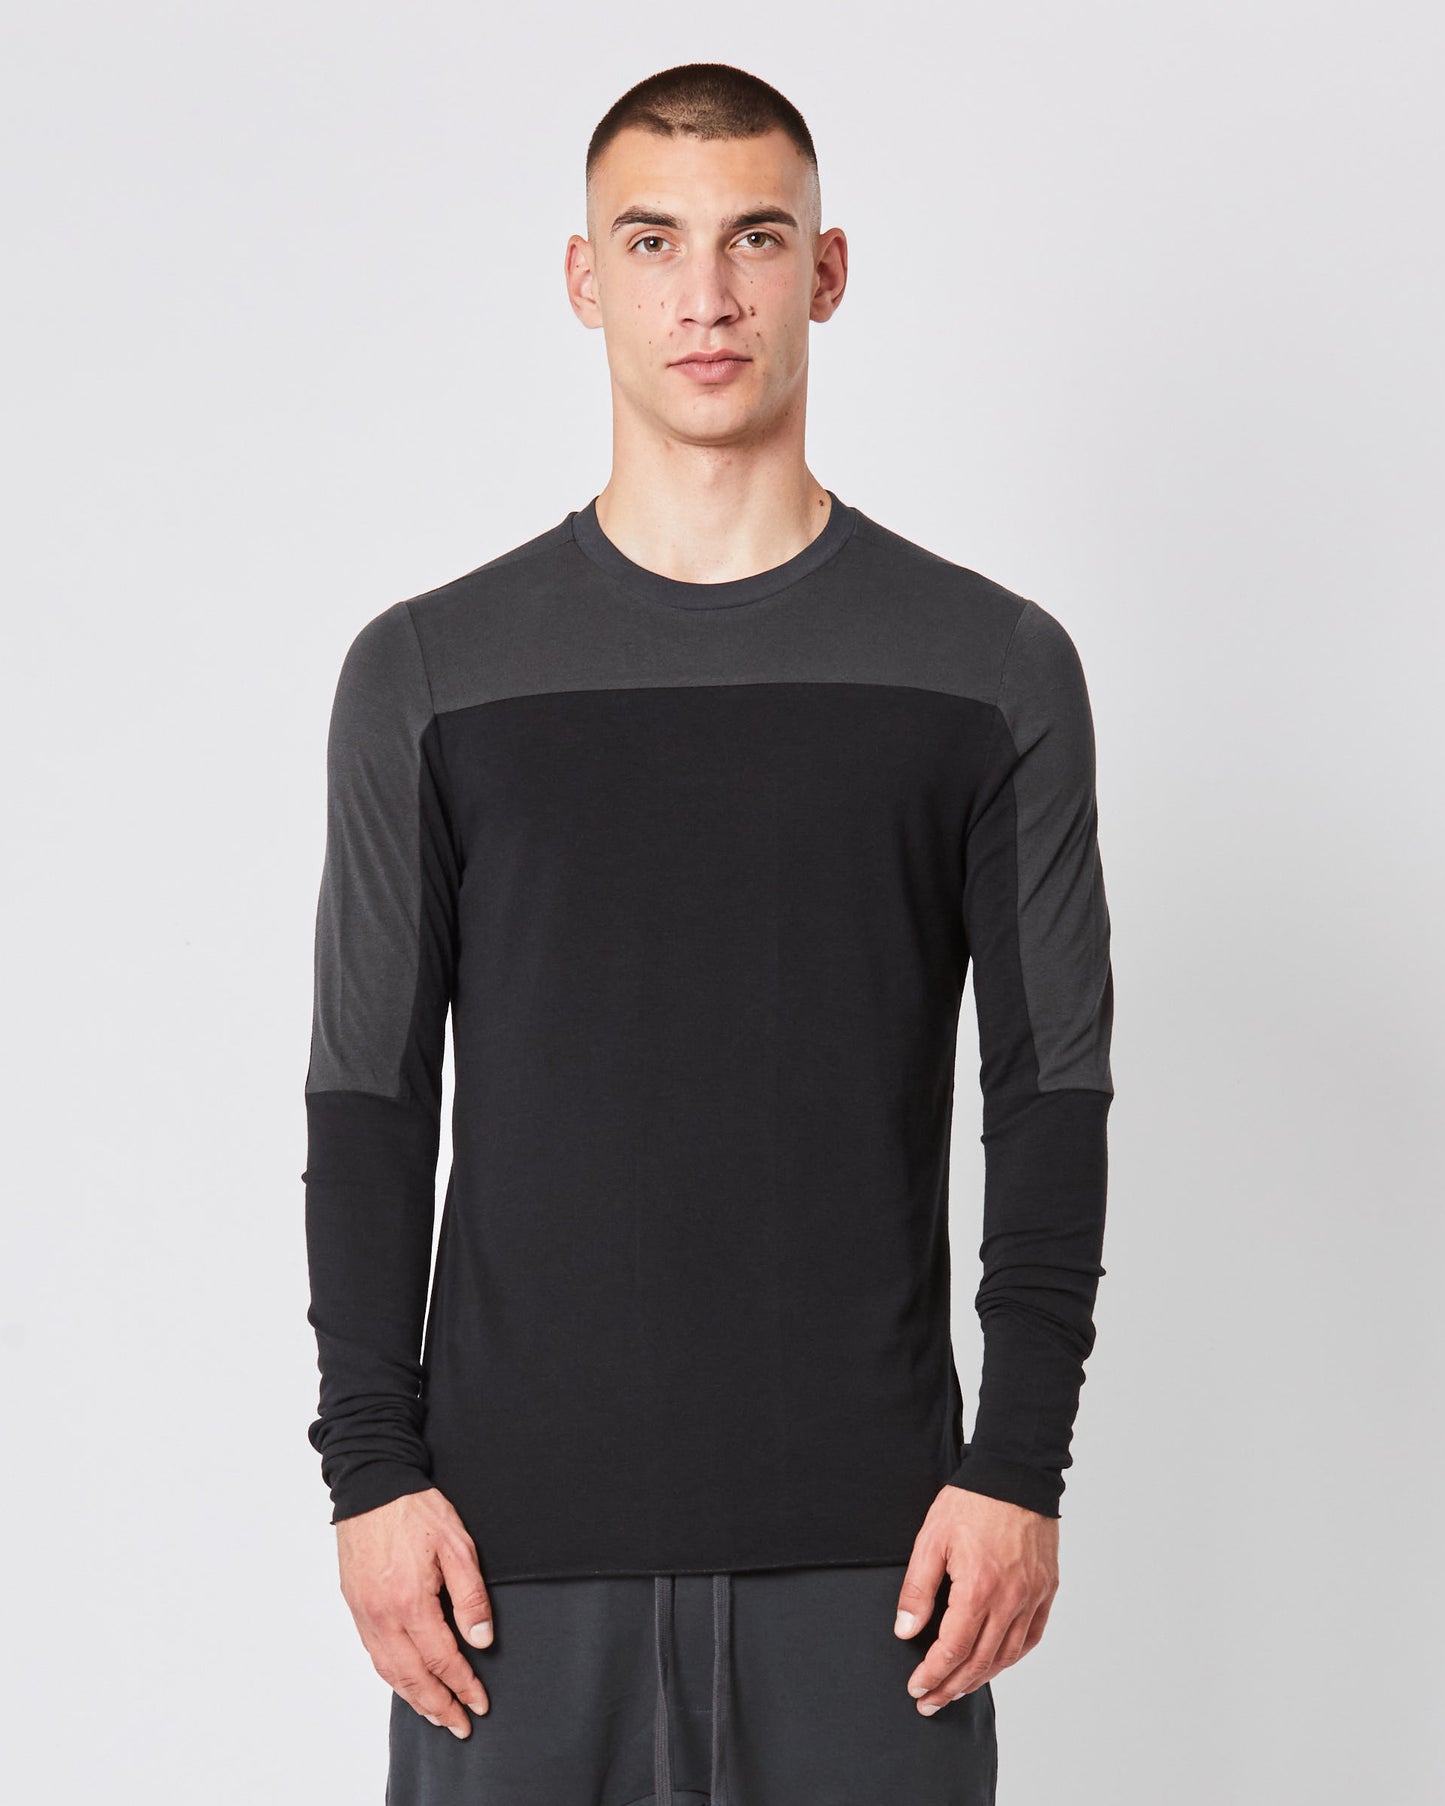 Black and Grey Panel Cotton Modal Long Sleeve T-shirt MTS 723